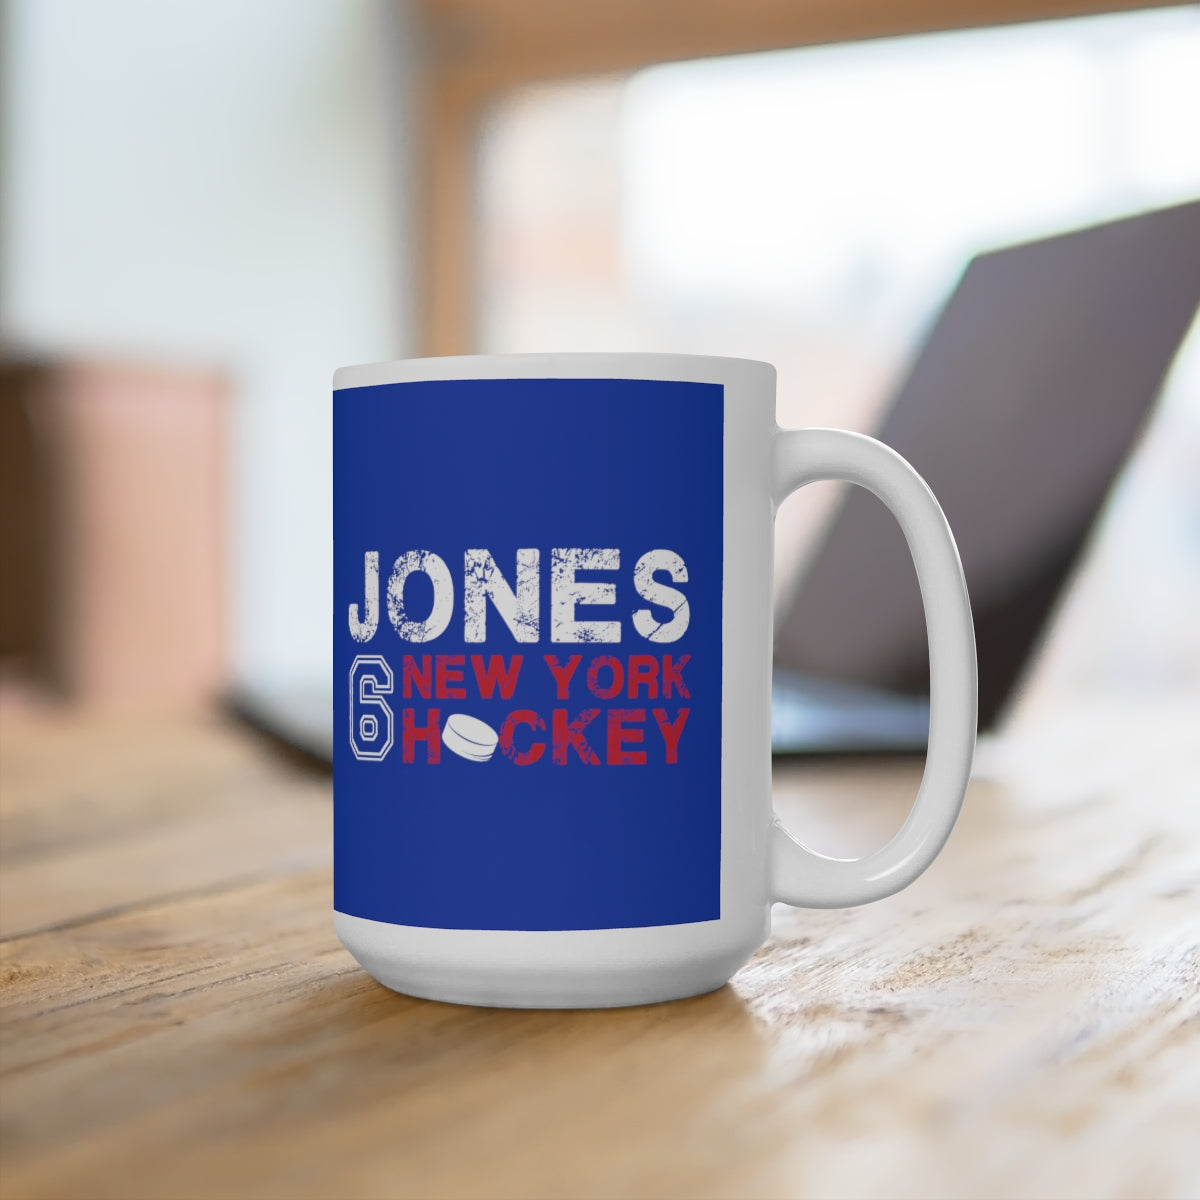 Jones 6 New York Hockey Ceramic Coffee Mug In Blue, 15oz